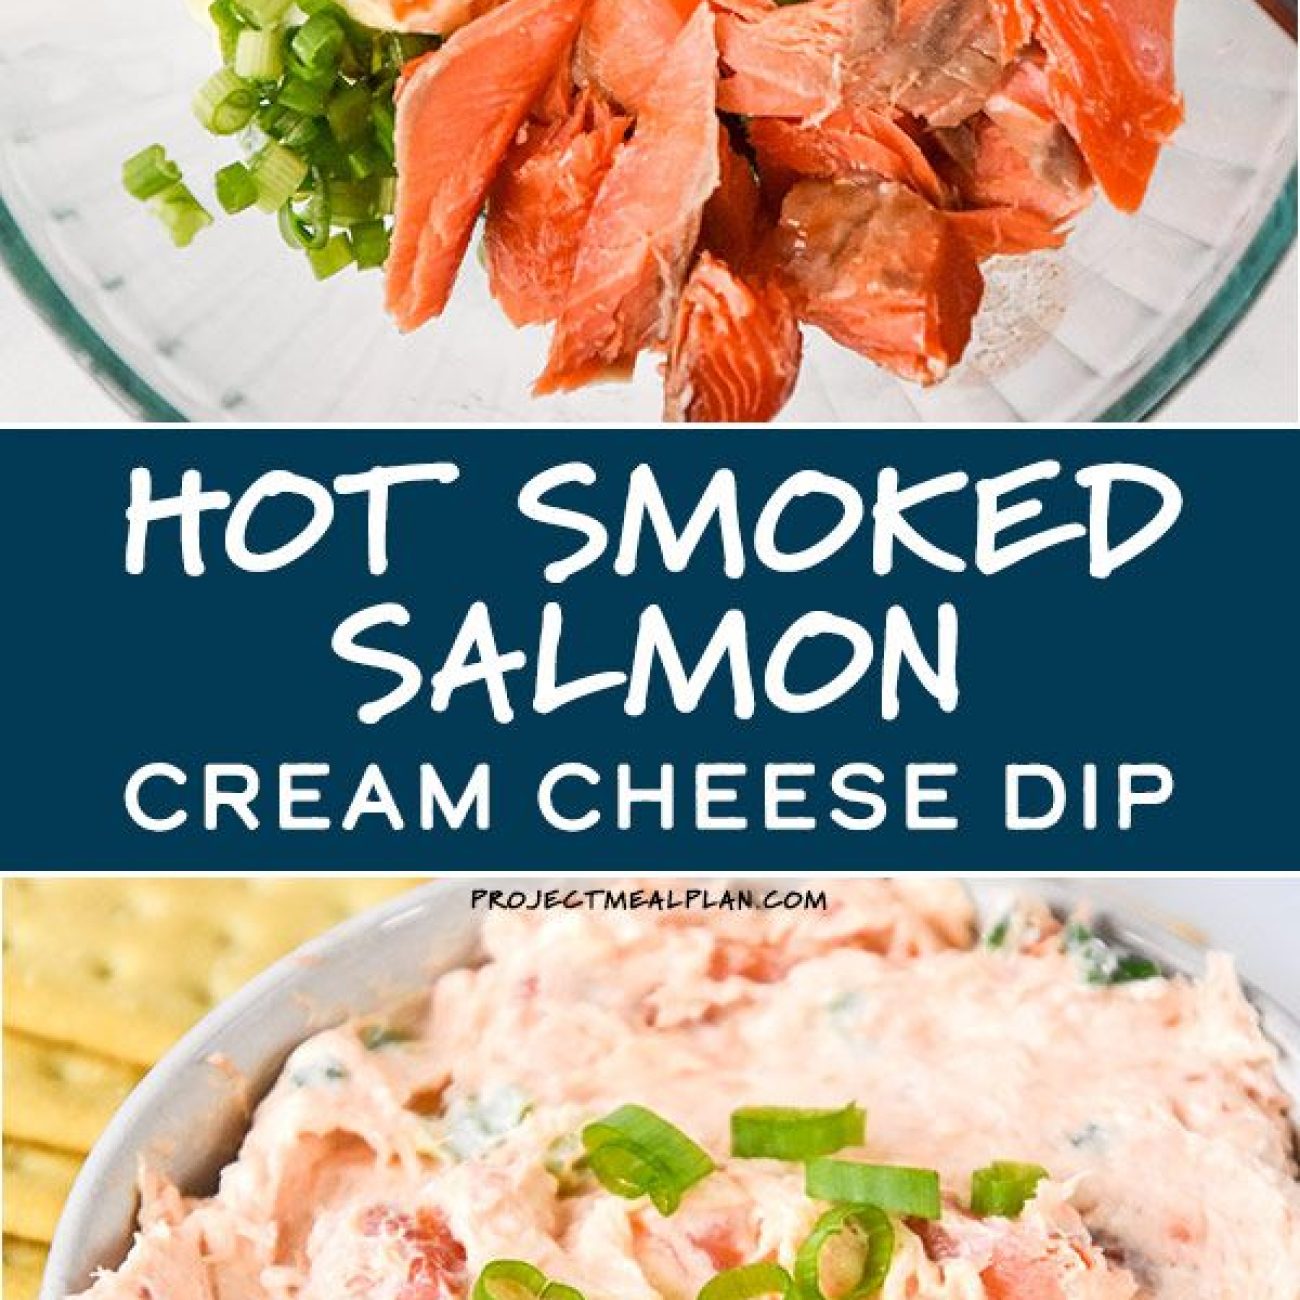 Salmon And Cream Cheese Dip